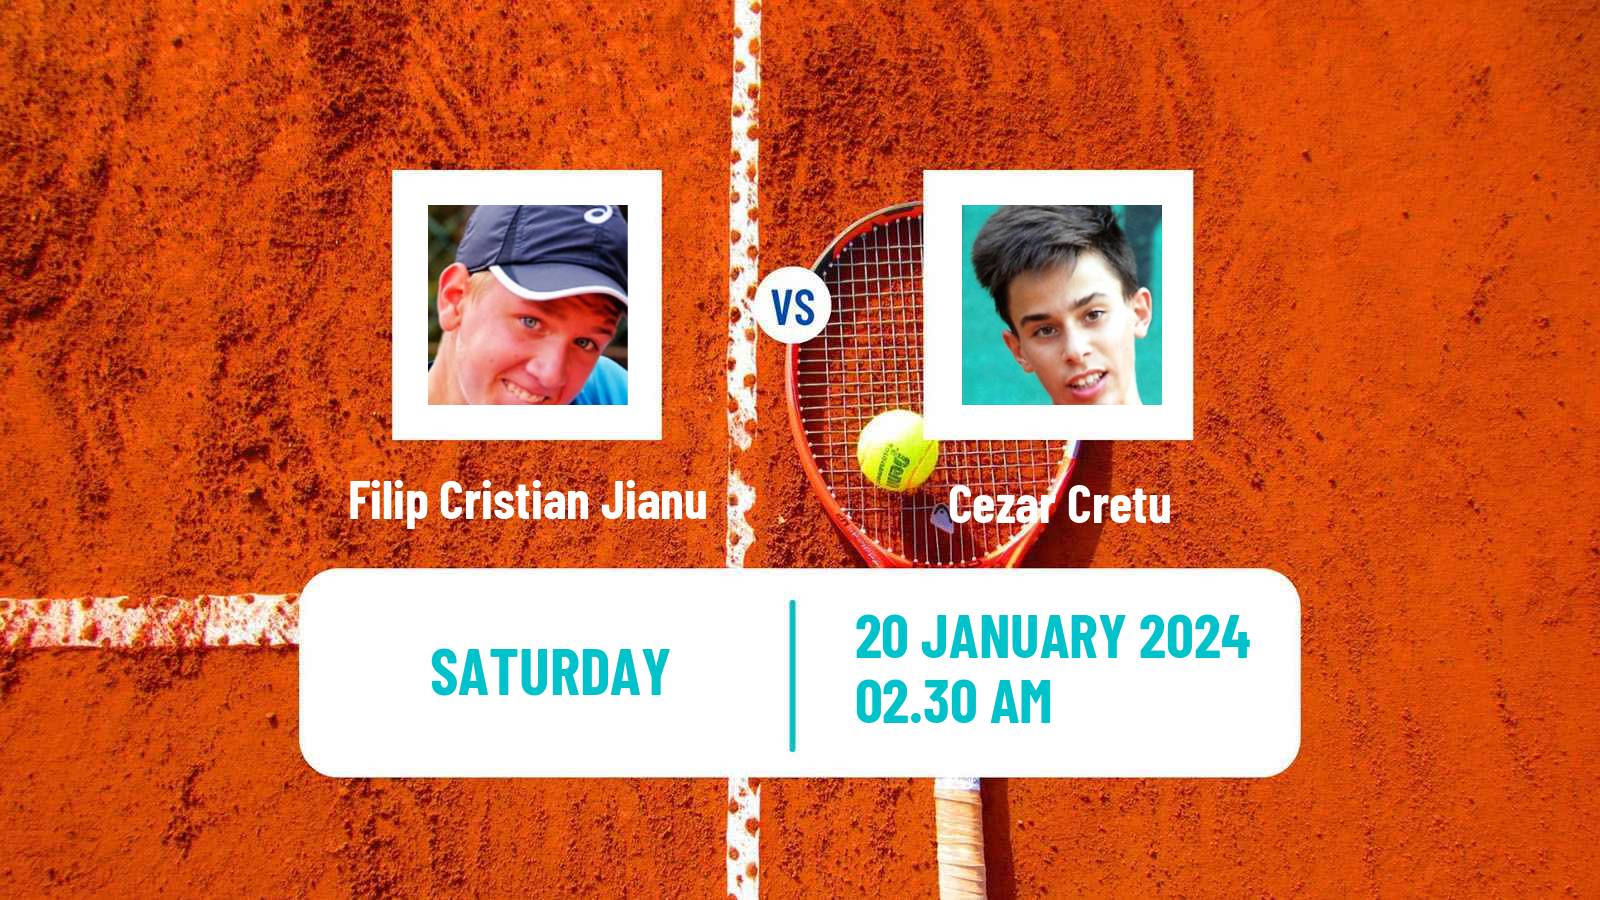 Tennis ITF M15 Antalya 2 Men Filip Cristian Jianu - Cezar Cretu